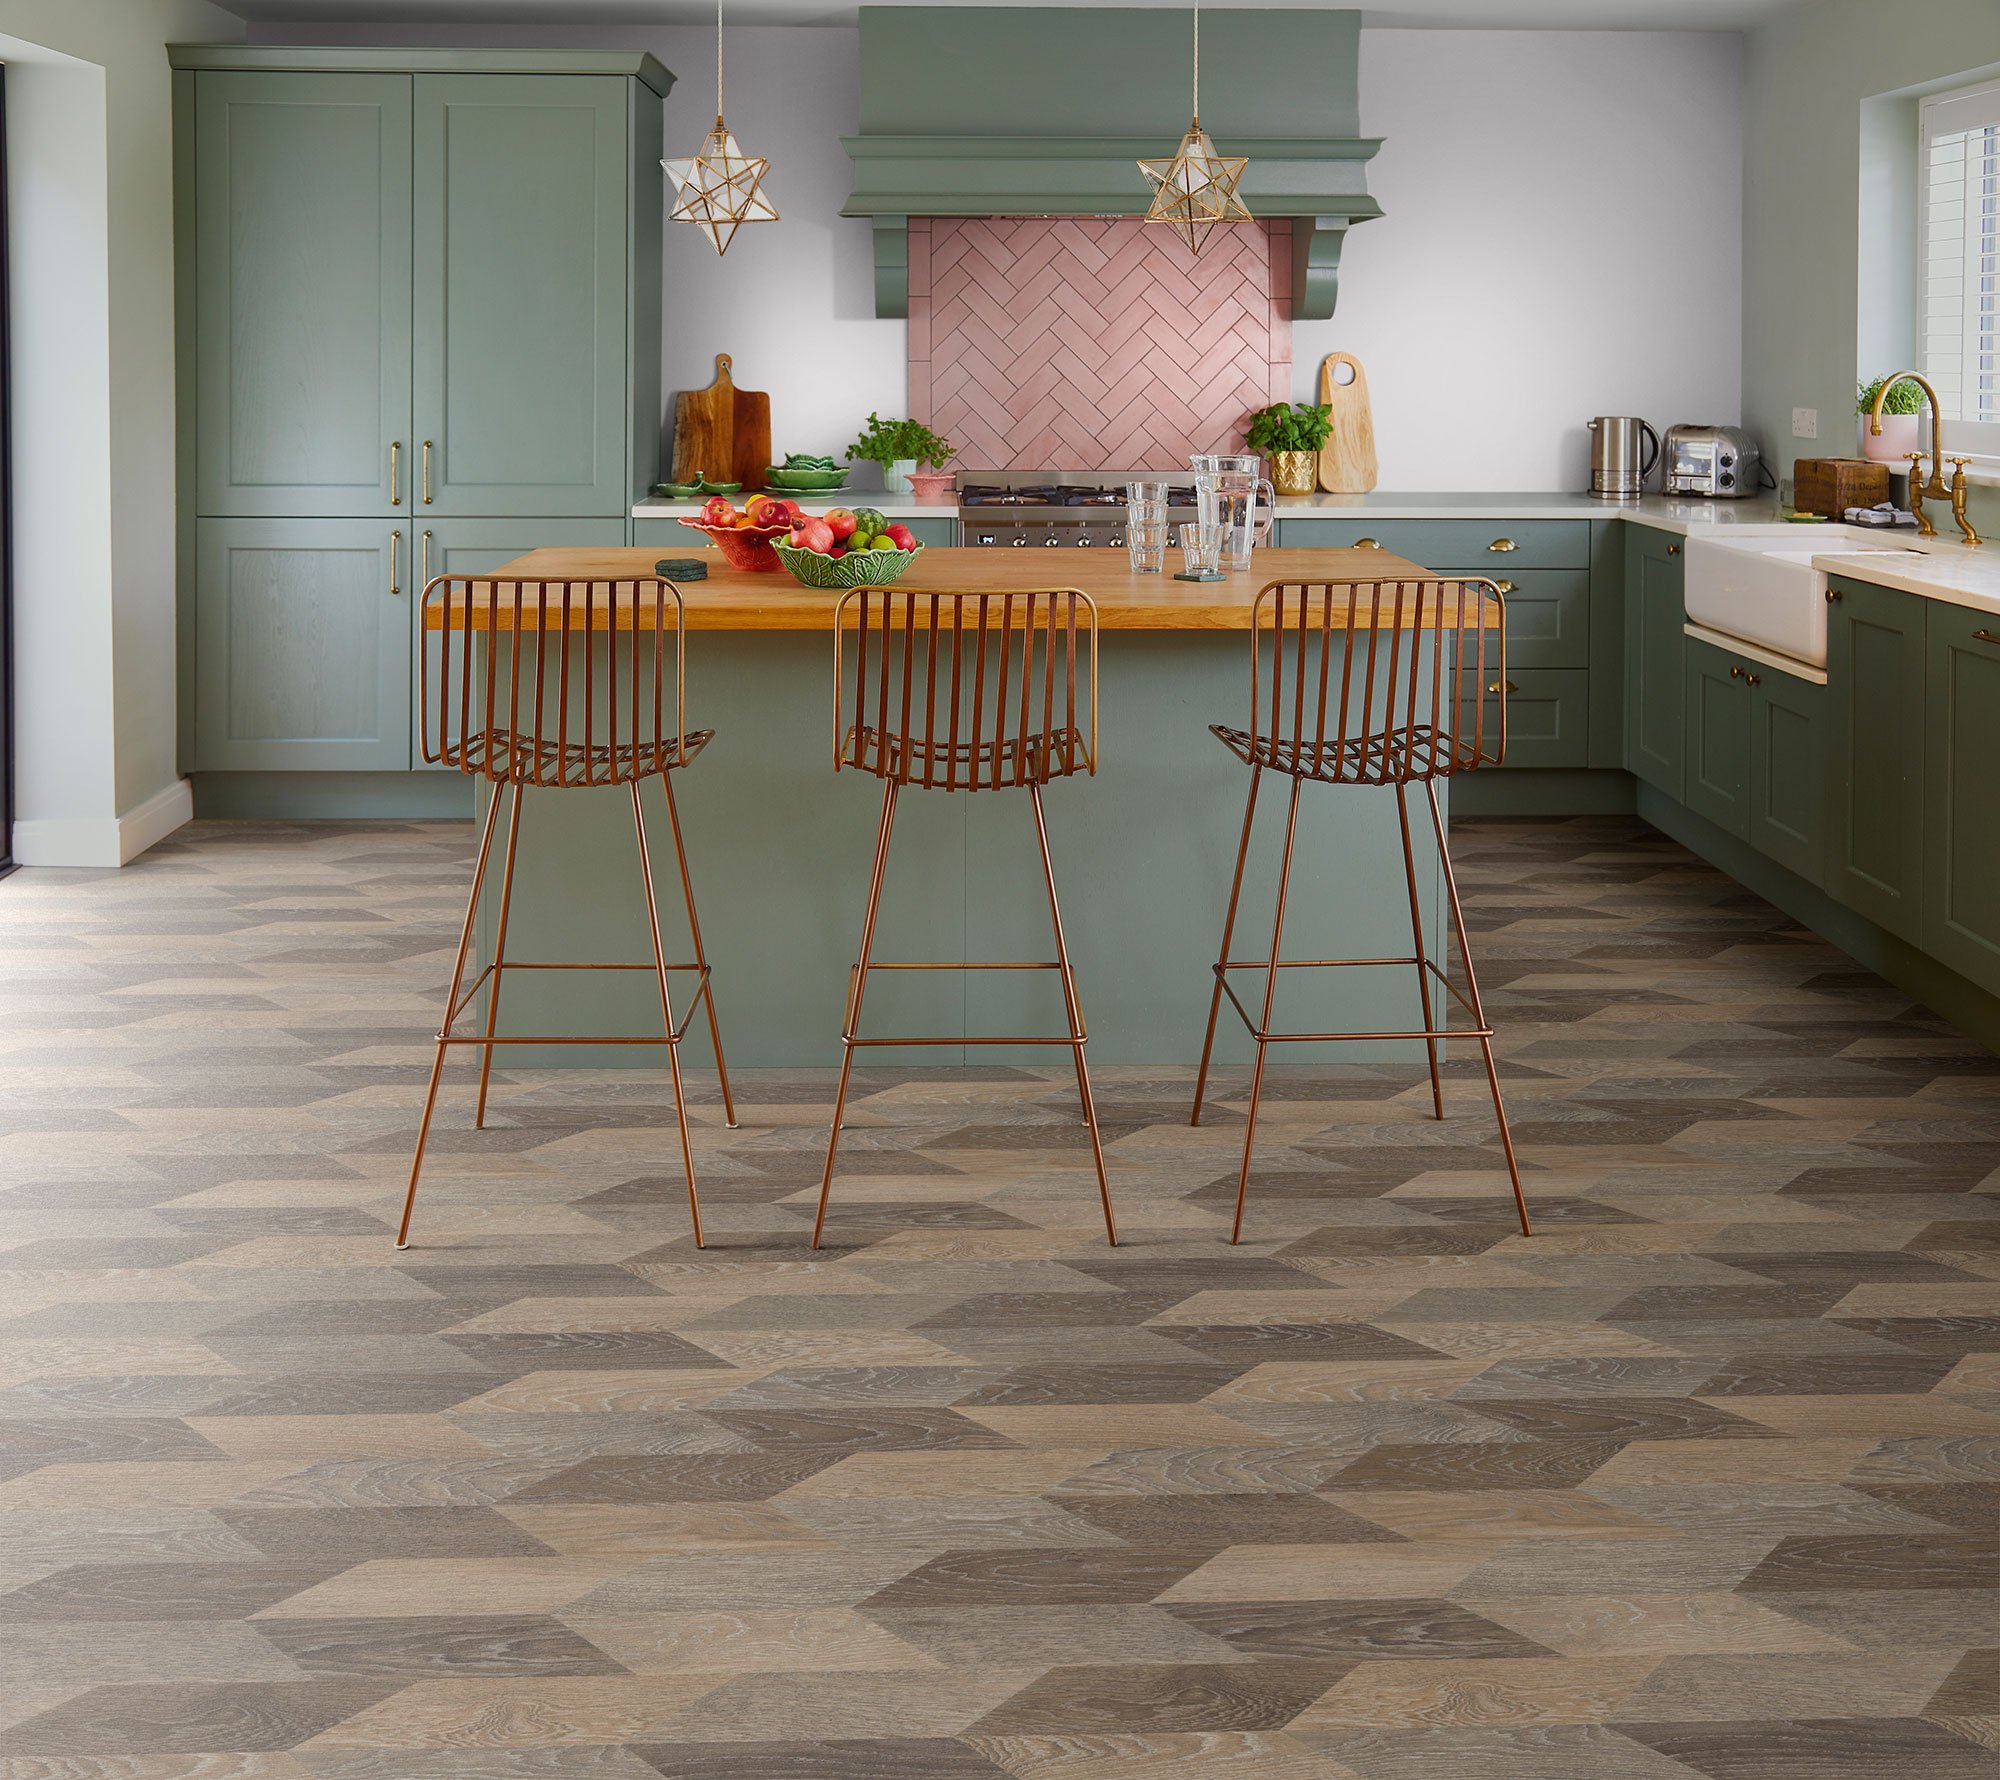 Beautiful herringbone pattern flooring in a new kitchen